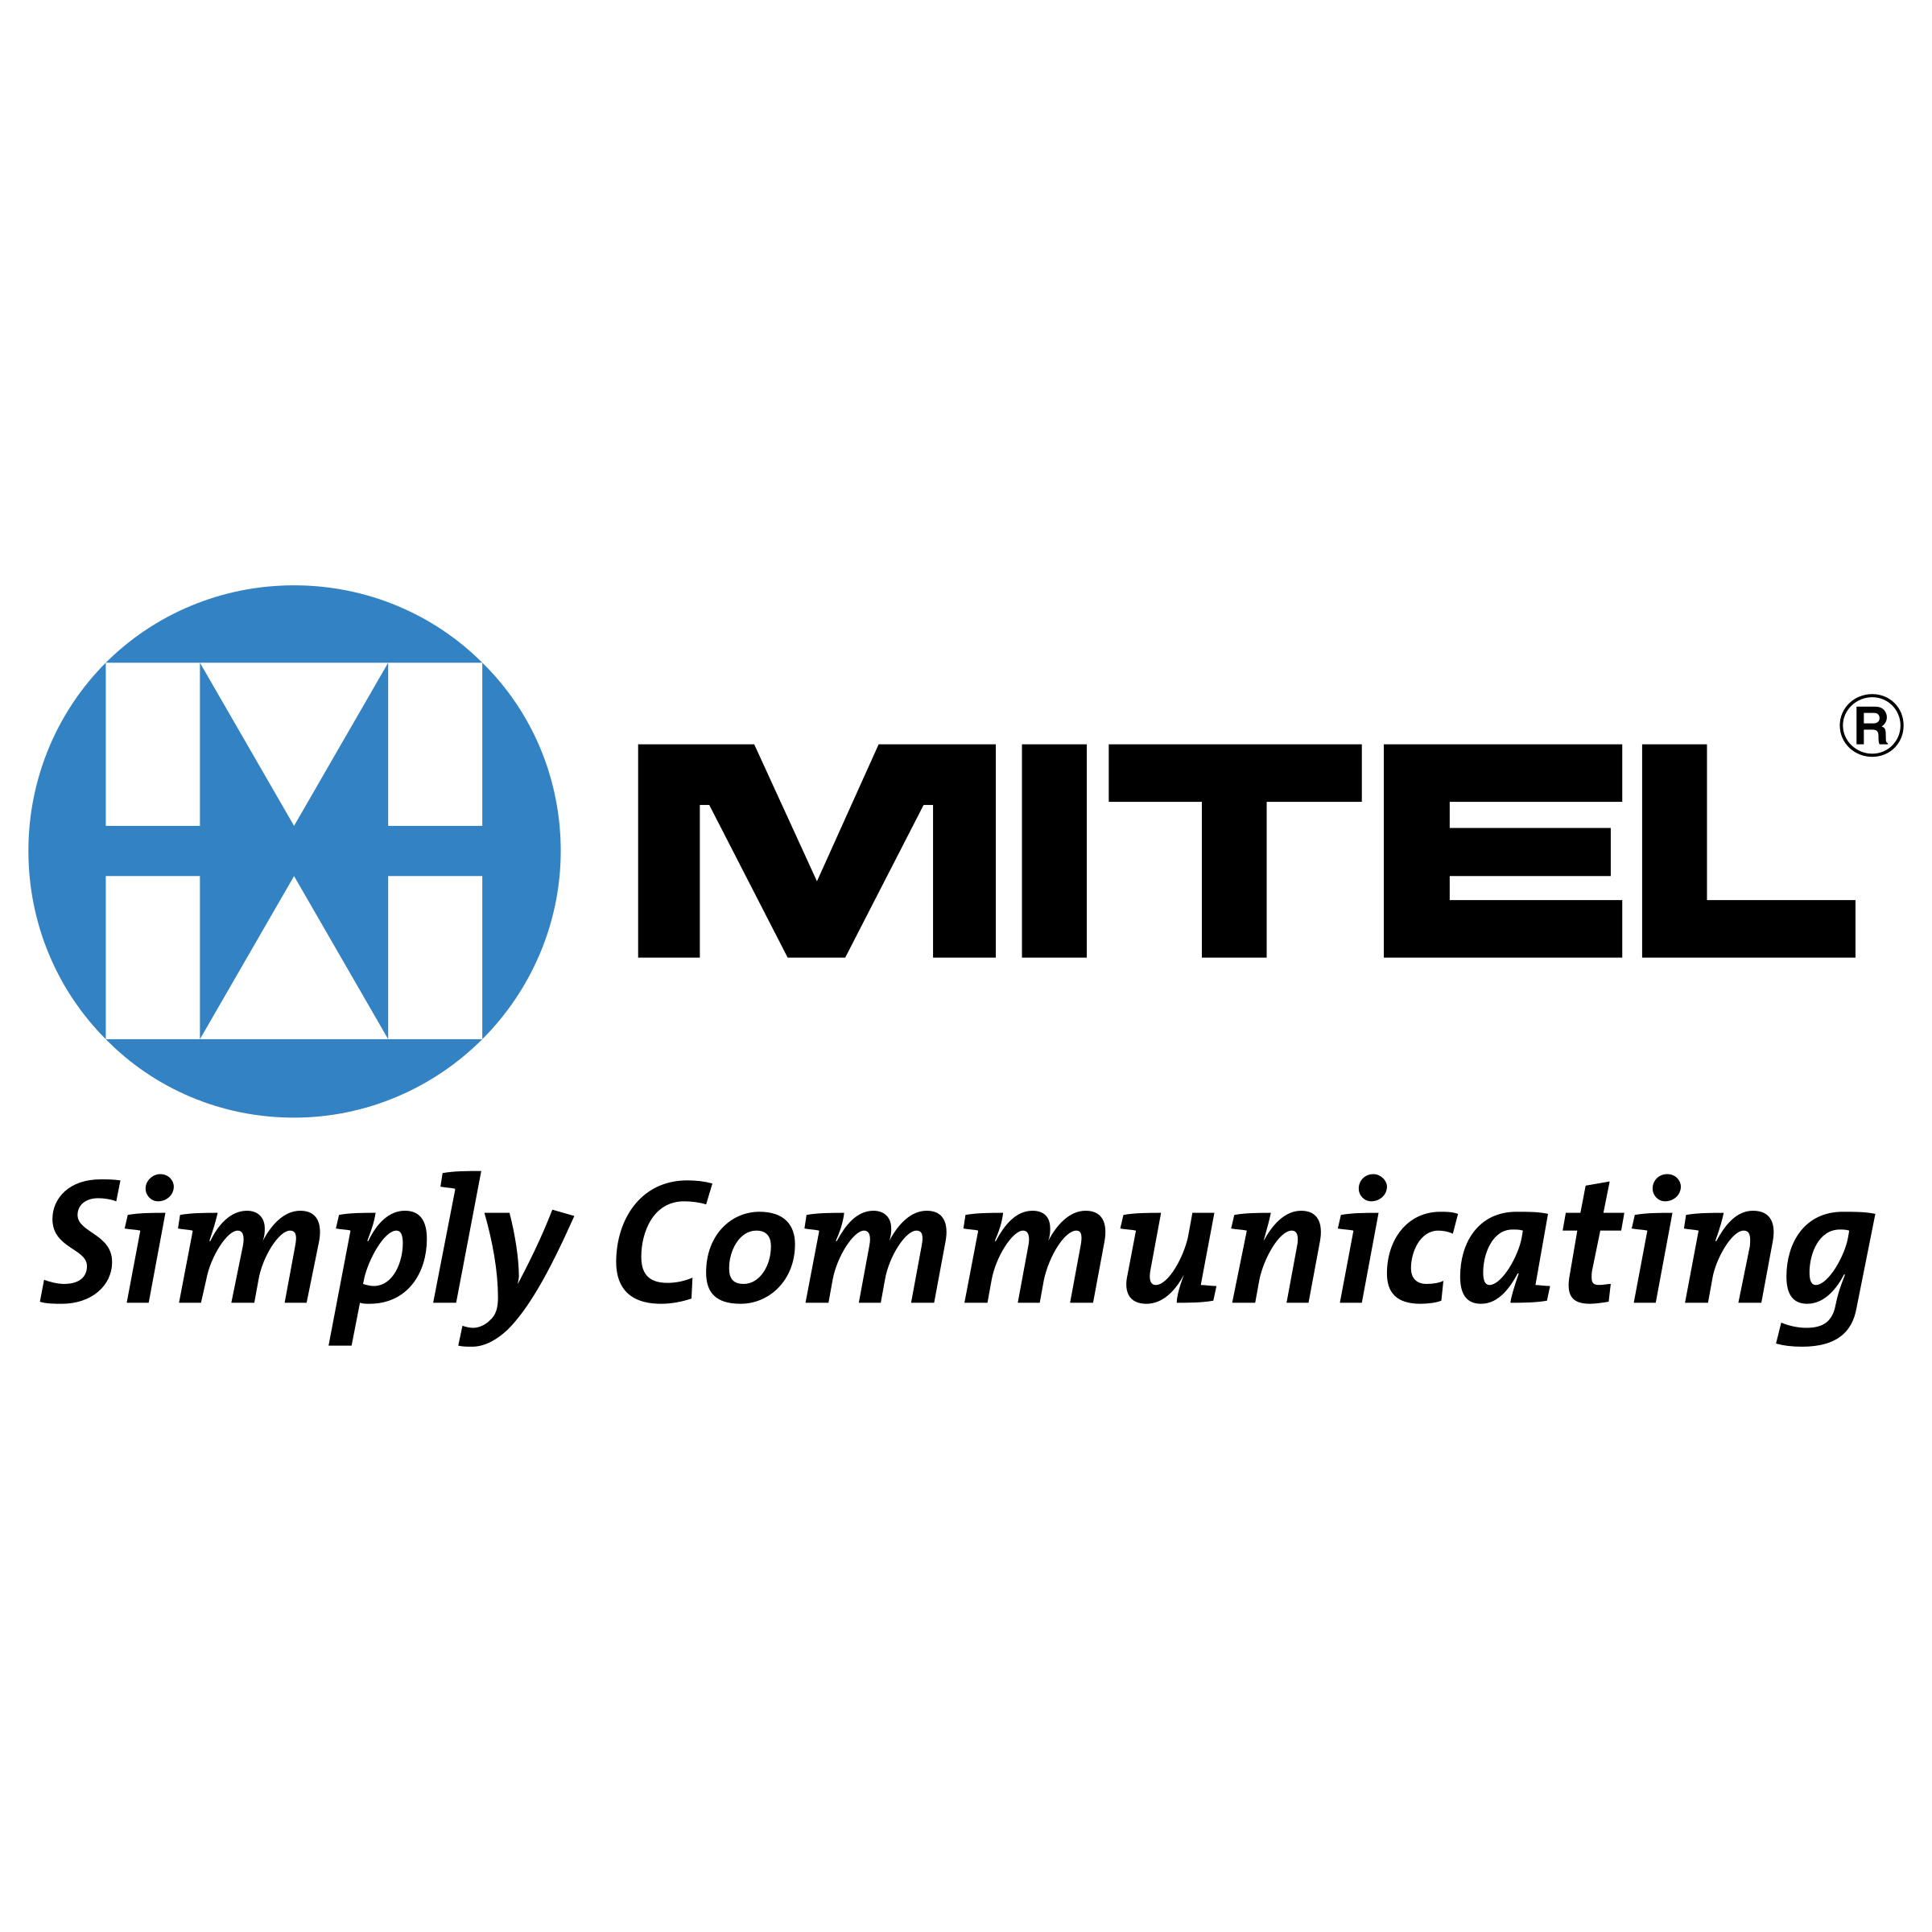 Mitel Logo - Mitel Logo PNG Transparent & SVG Vector - Freebie Supply